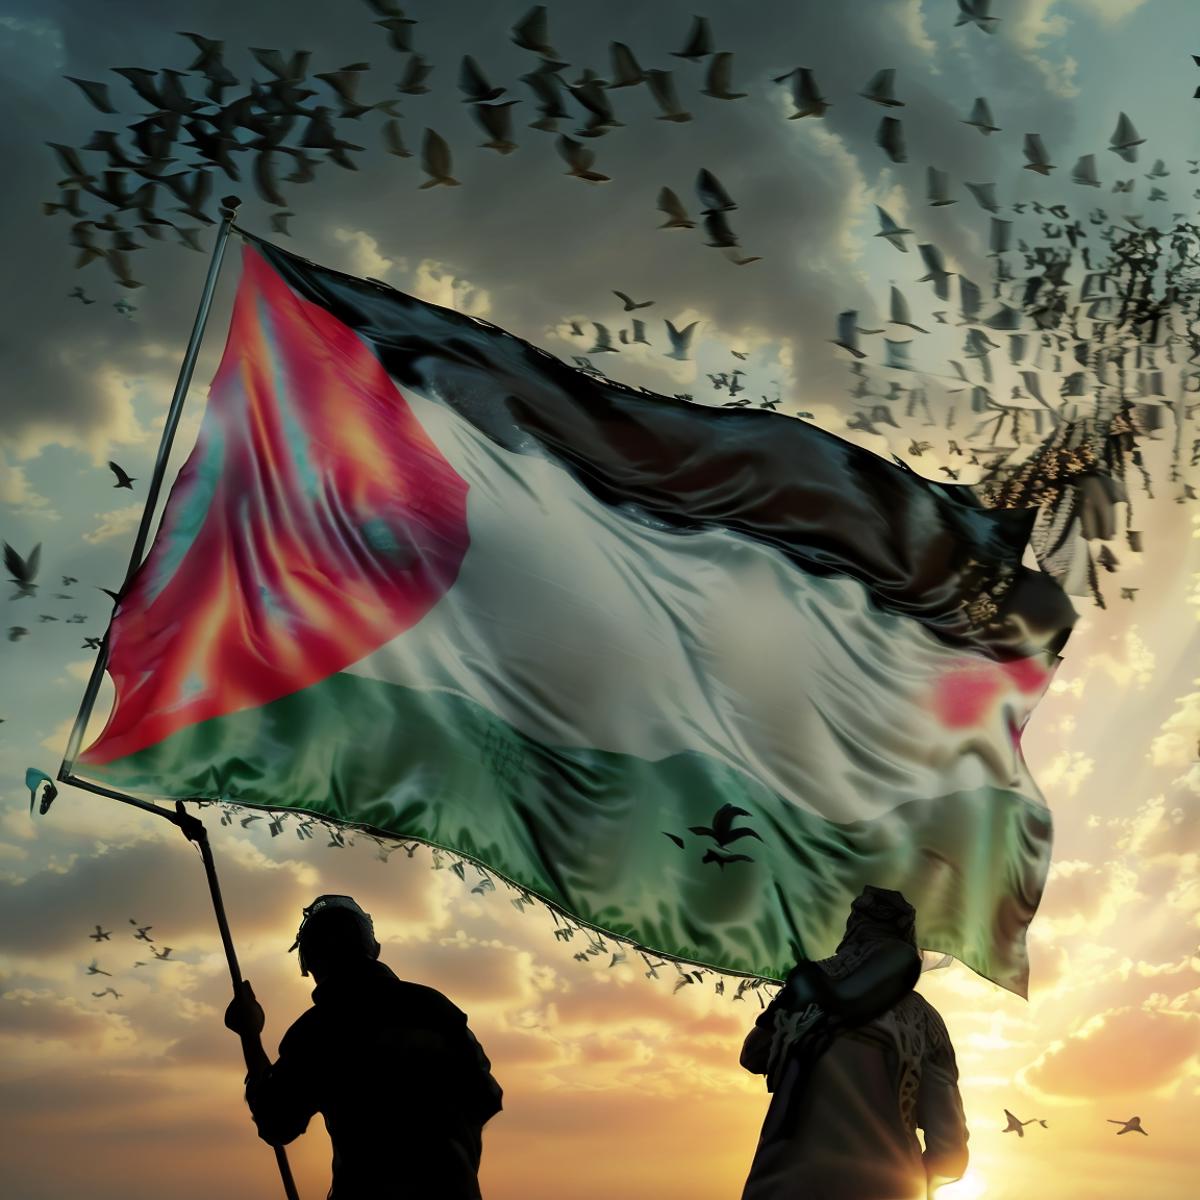 Palestine Flag image by m51ja